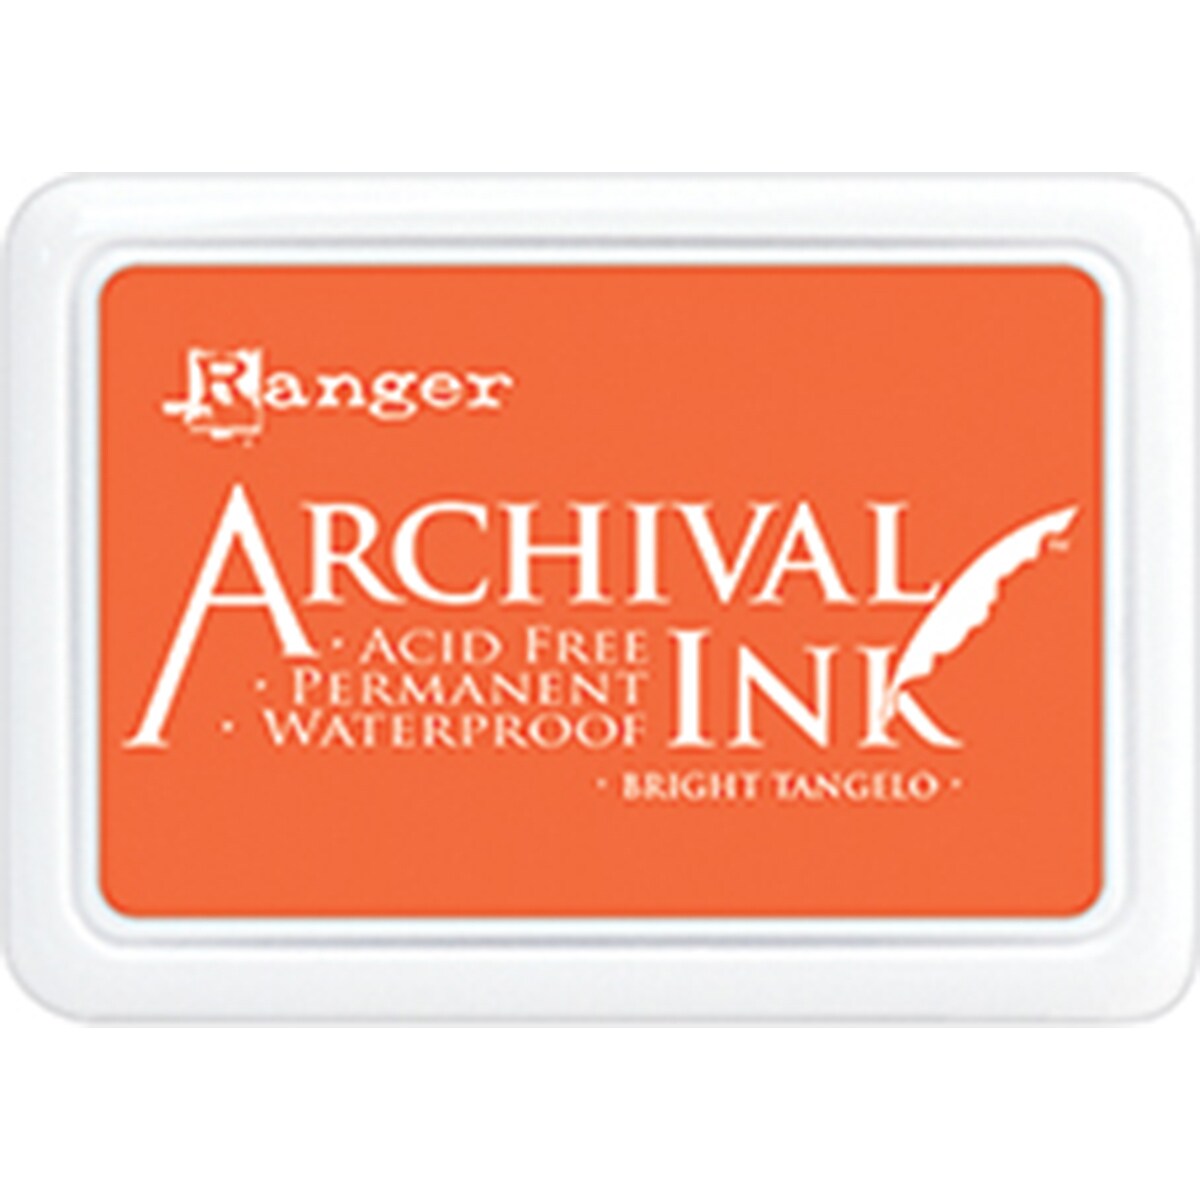 Coastal Coral Archival Ink Pad #0 - Ranger